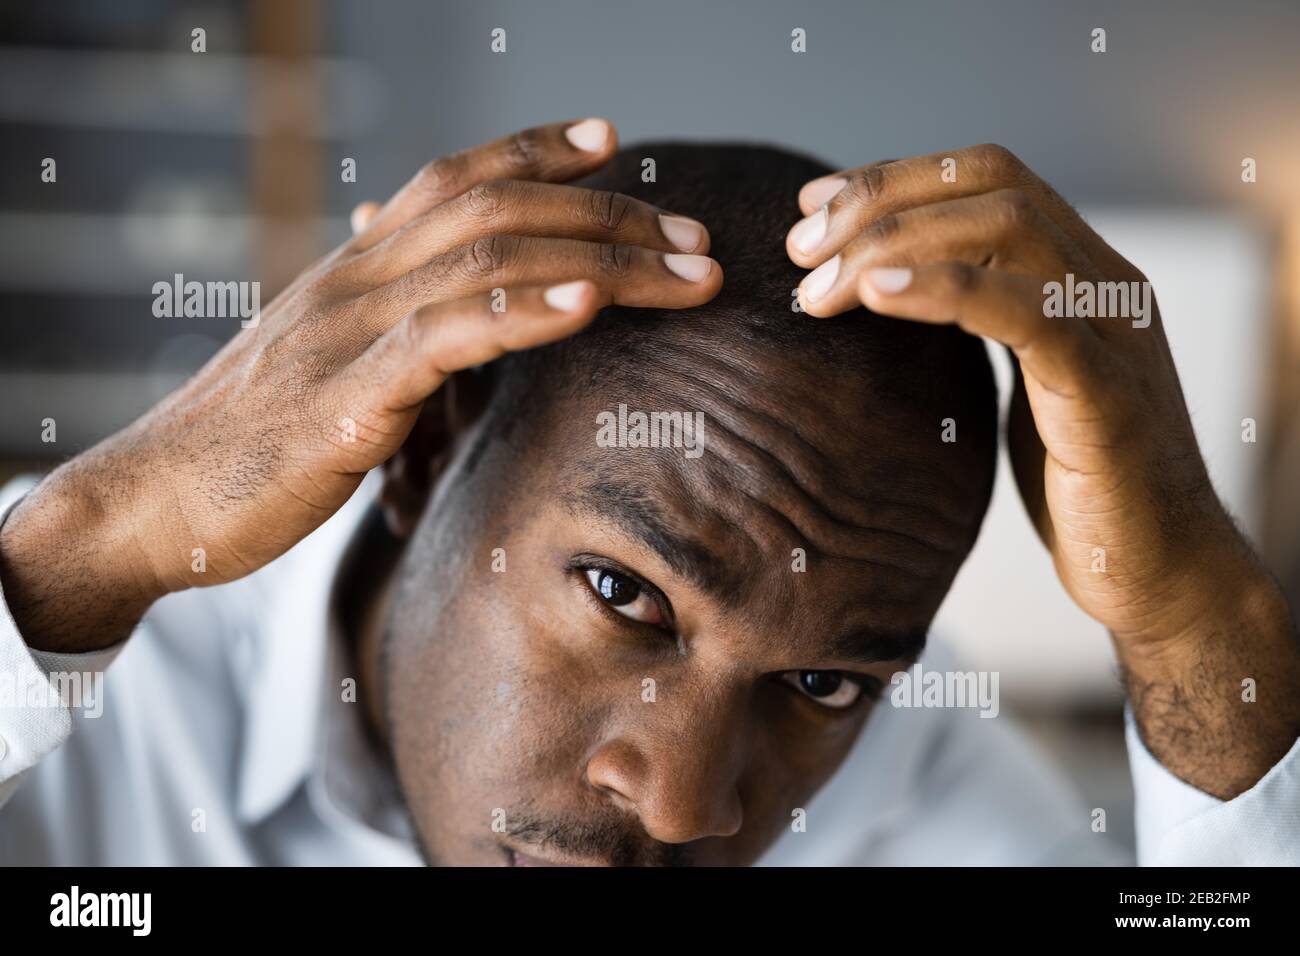 Young African Men Hair Loss. Watching Hairloss Stock Photo